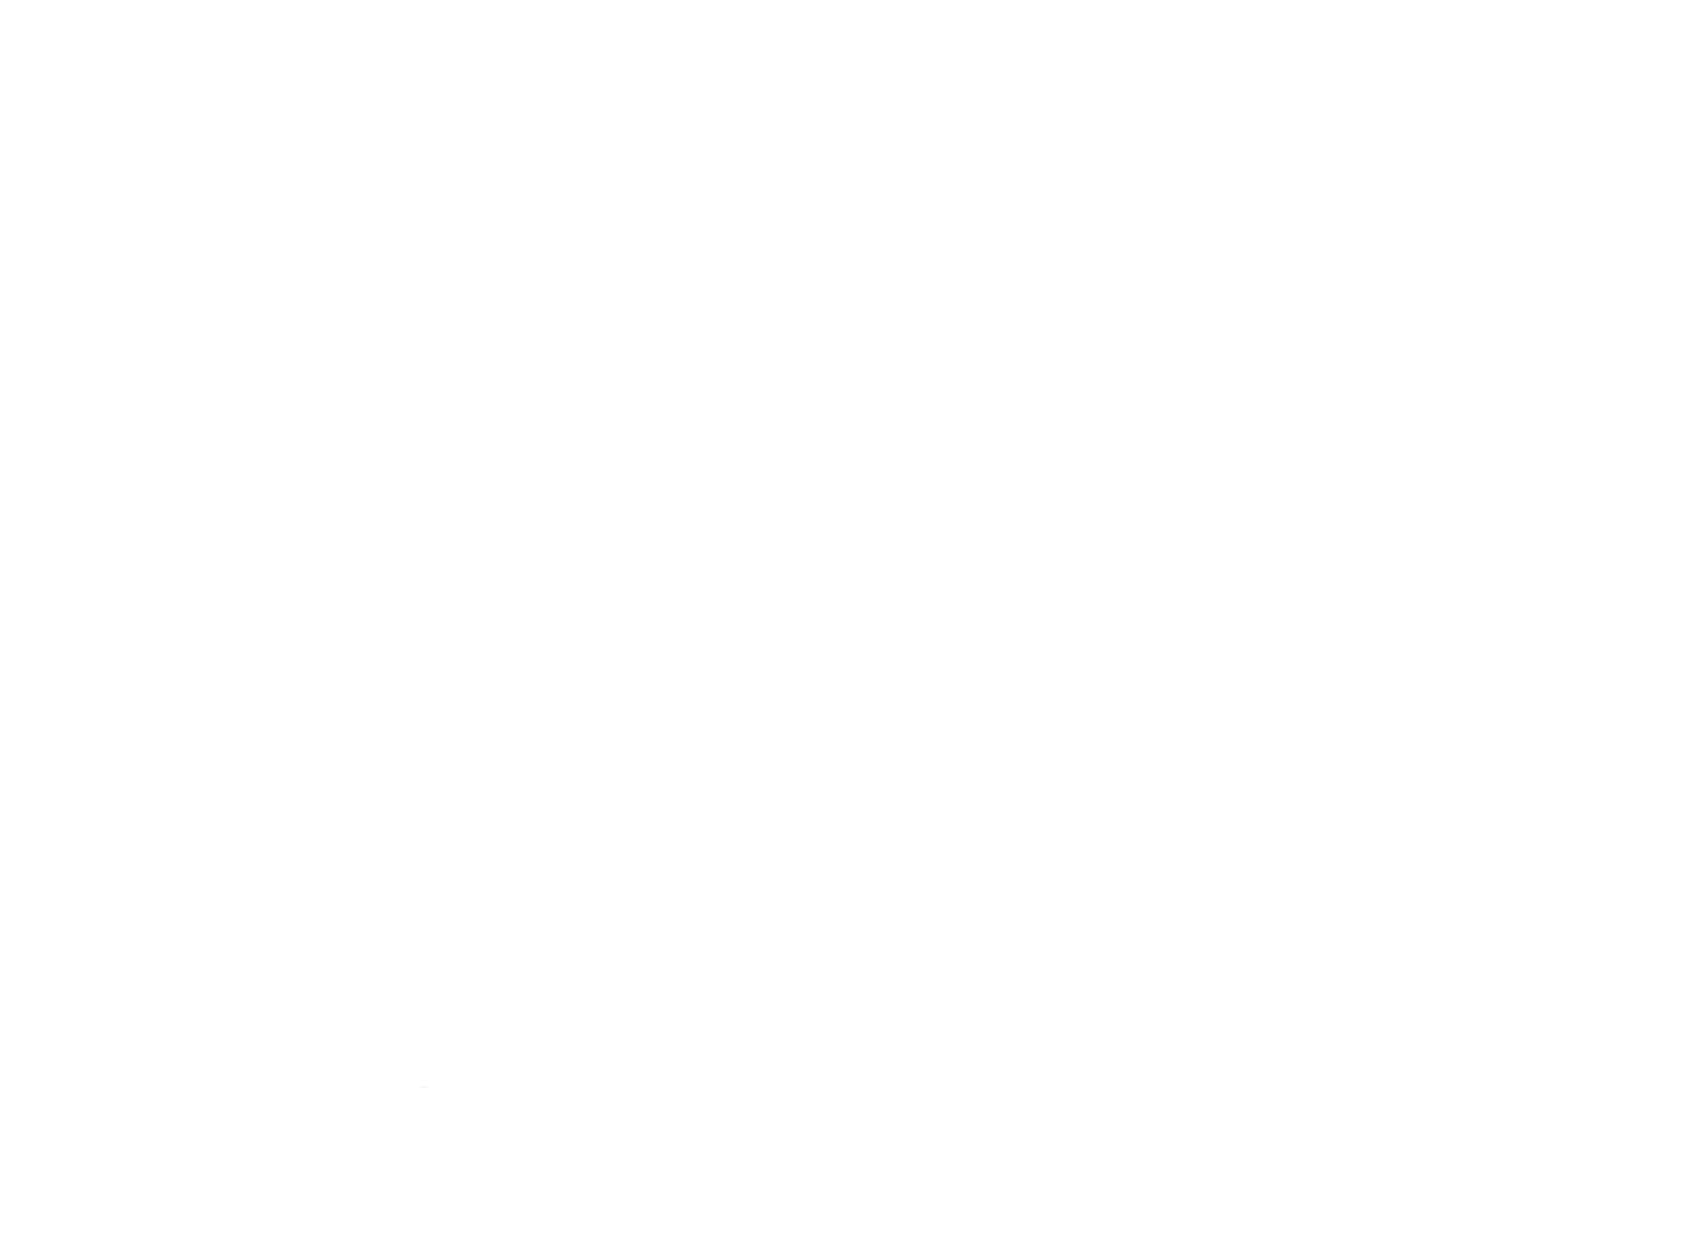 FSC and PEFC Logos